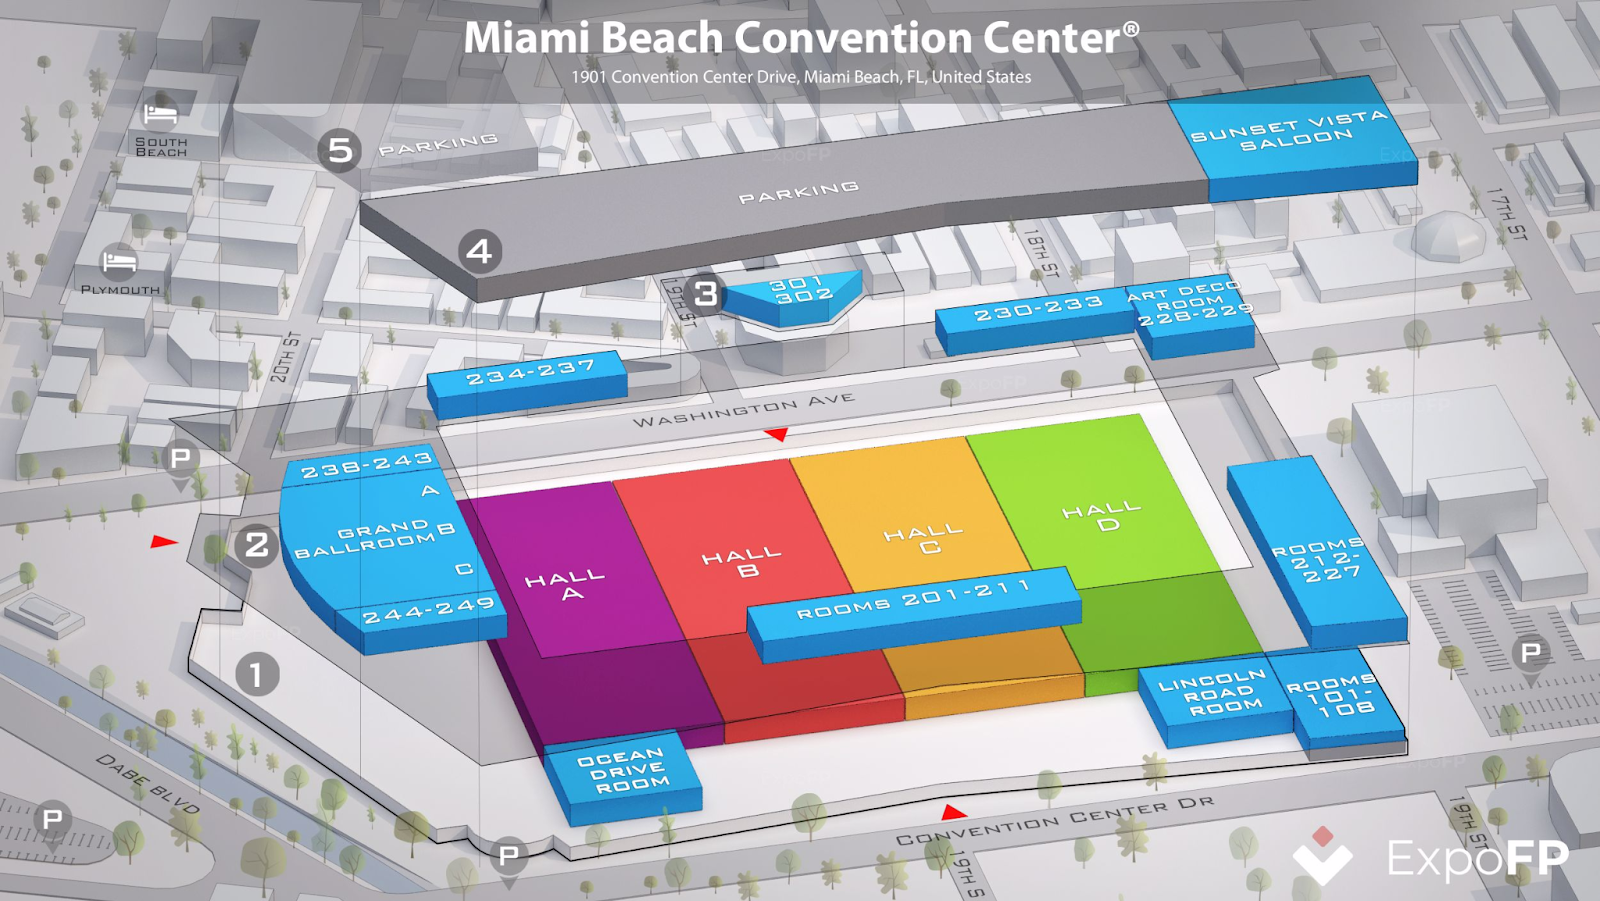 The Miami Beach Convention Center Map